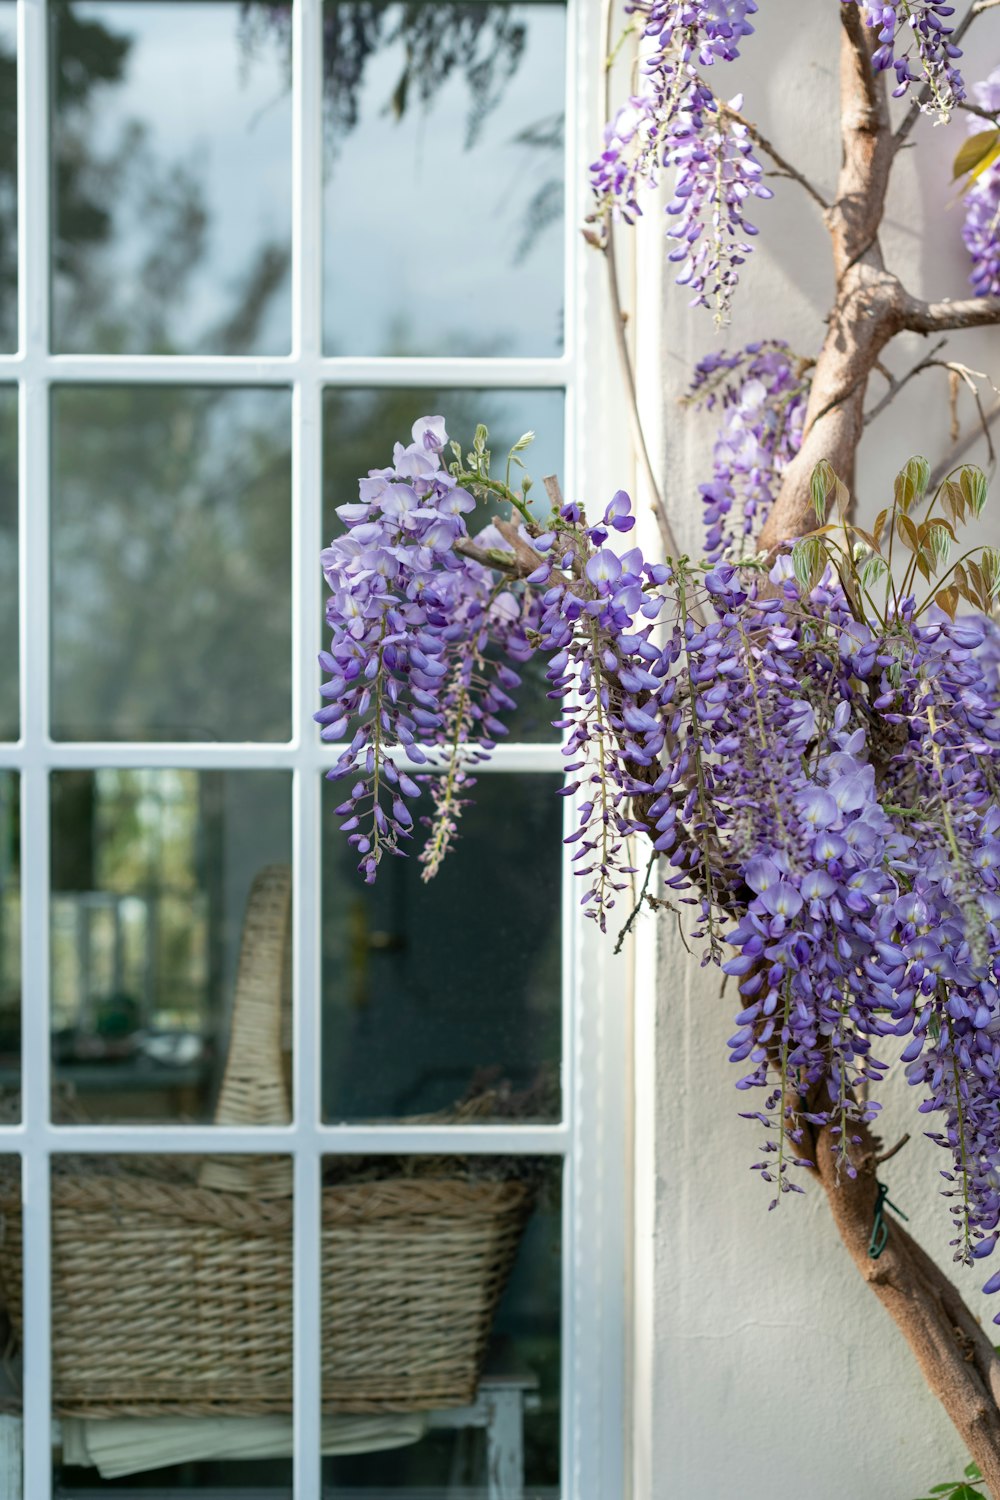 flores púrpuras cerca de una ventana de vidrio con marco de madera blanca